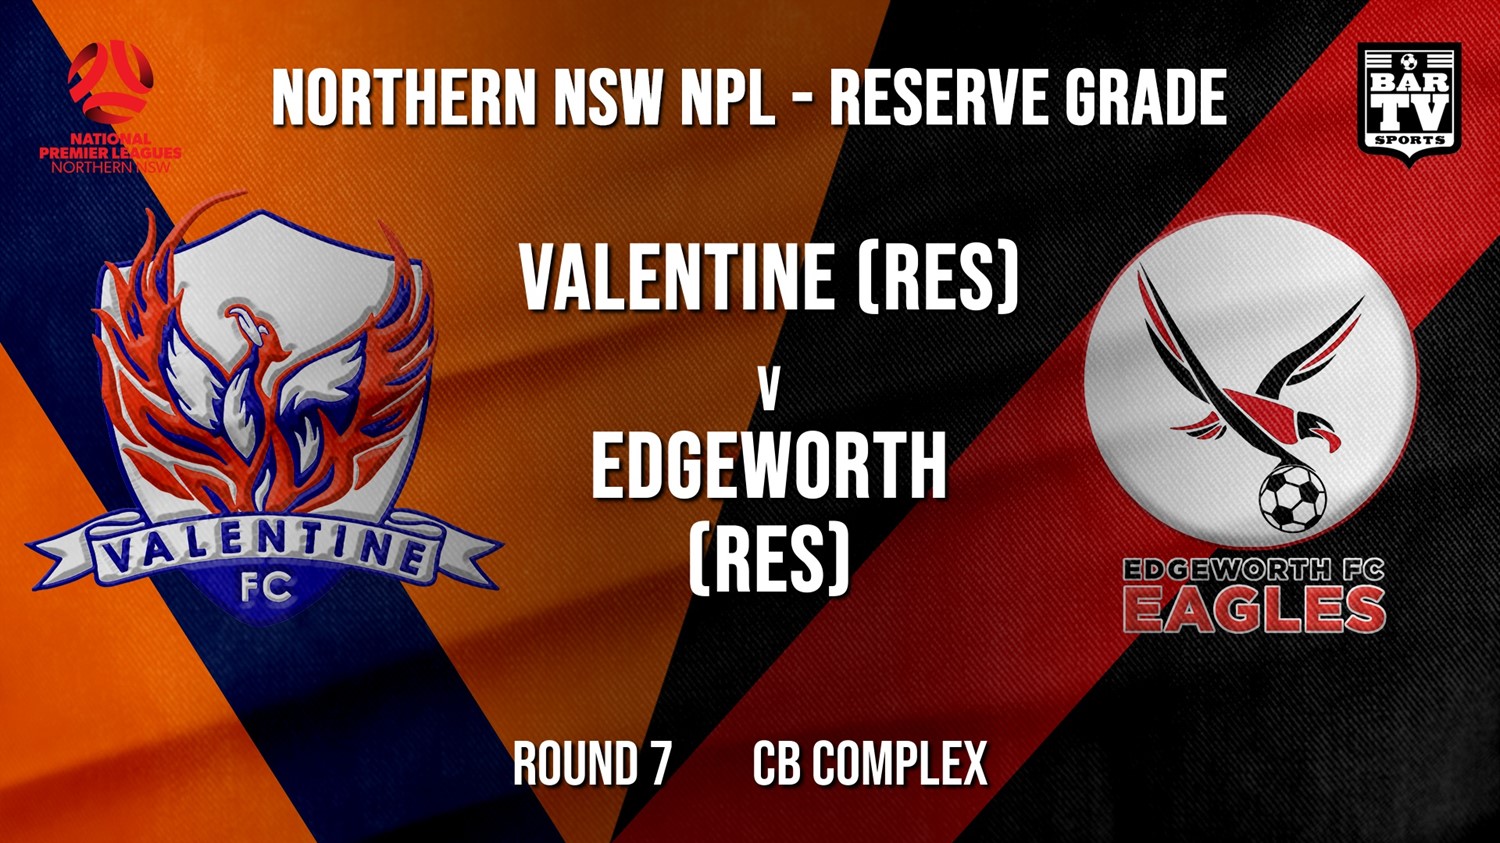 NPL NNSW RES Round 7 - Valentine Phoenix FC (Res) v Edgeworth Eagles (Res) Minigame Slate Image